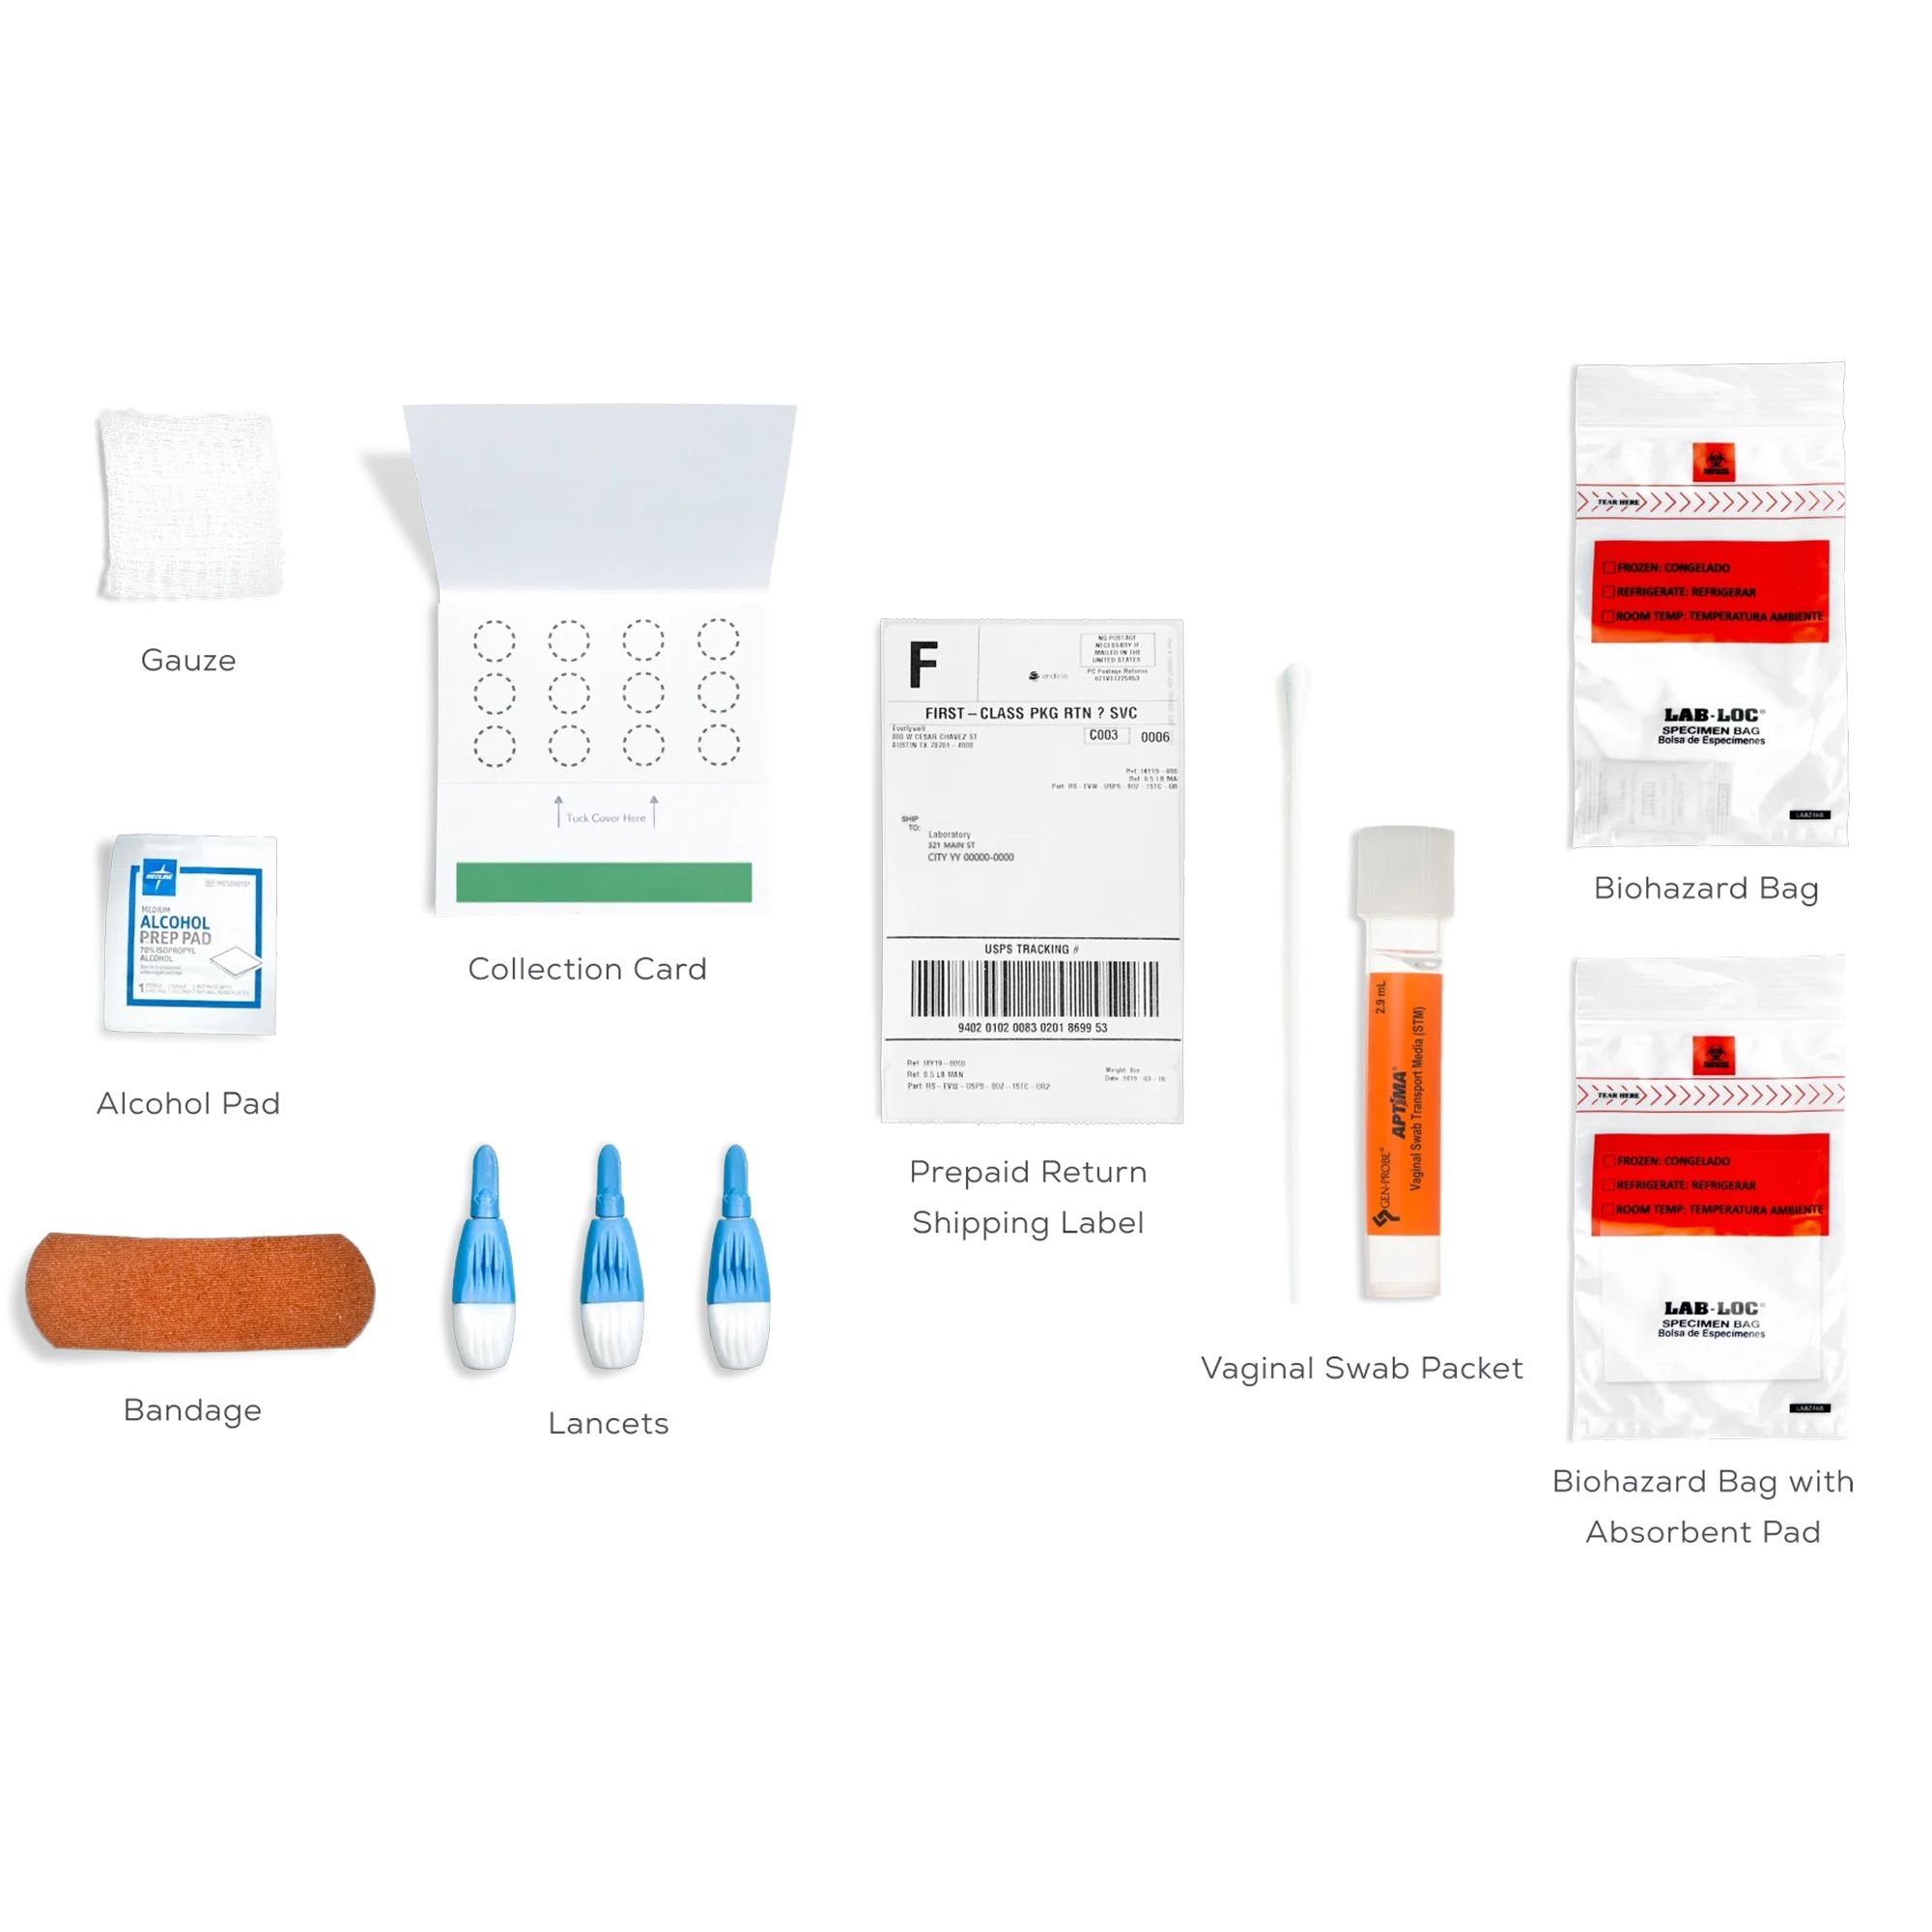 Everlywell Female STD Test - 1 Test Kit